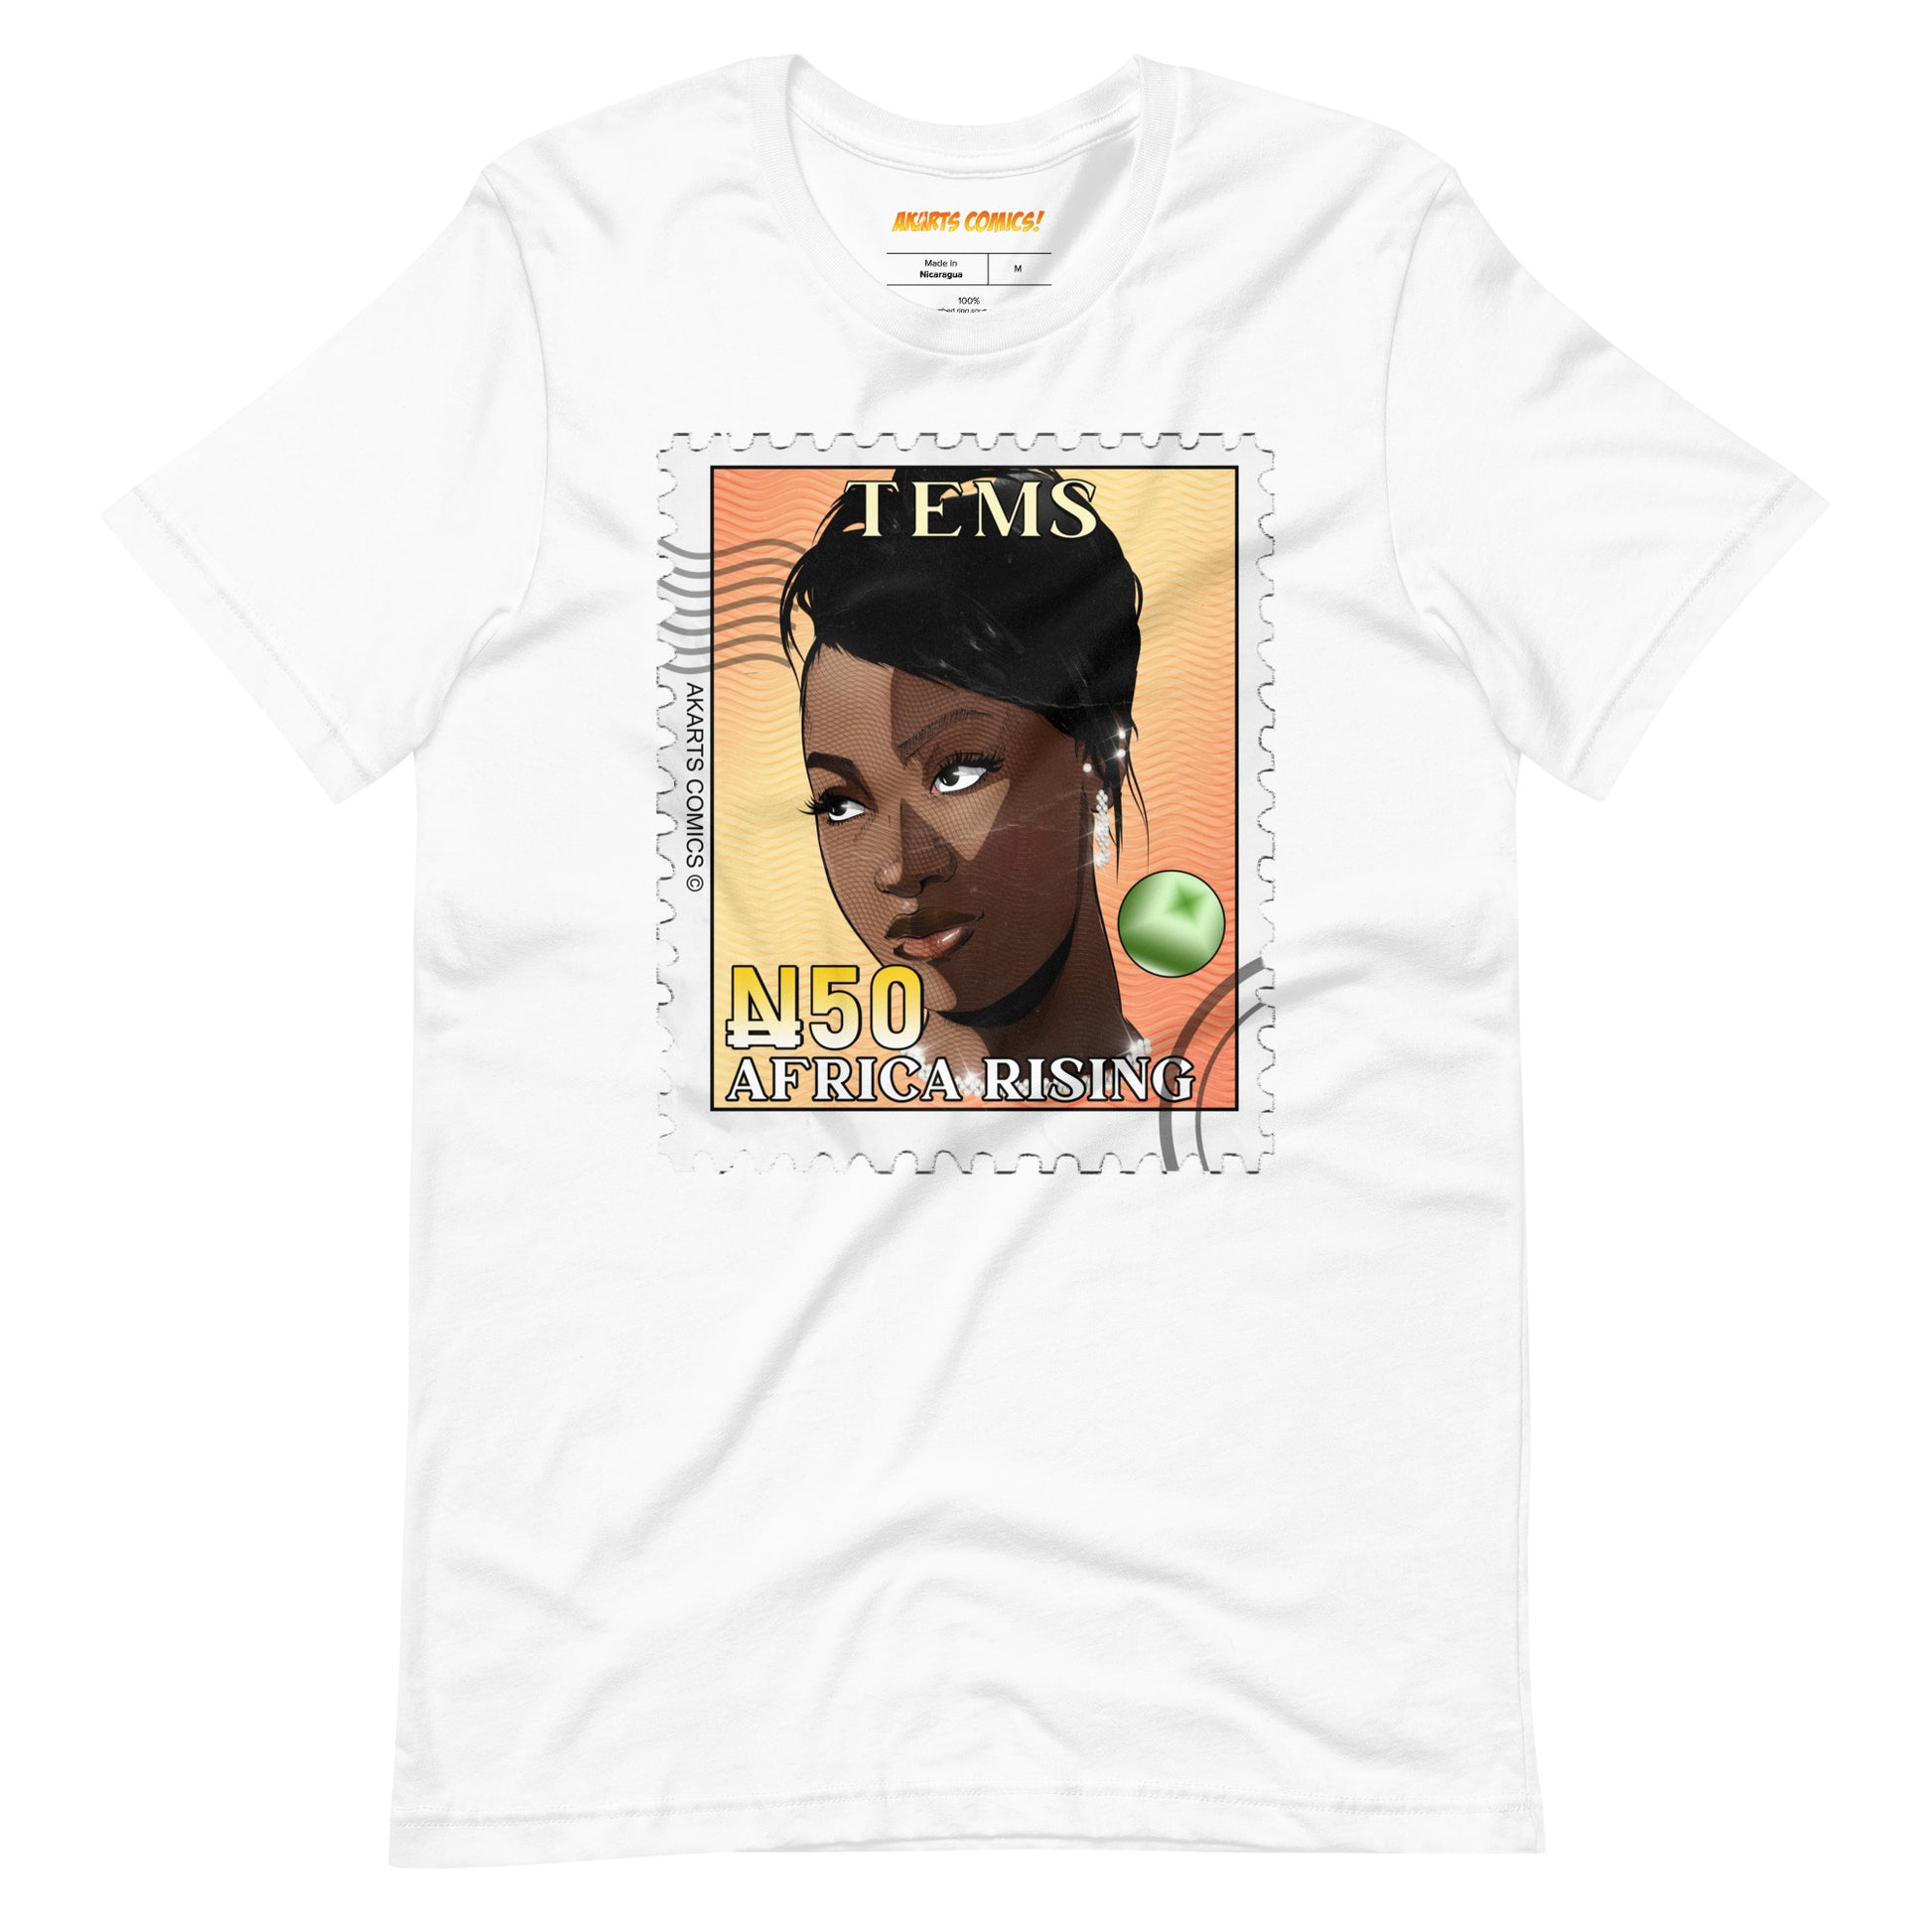 Tems Africa Rising Stamp T-Shirt - AKARTS Comics